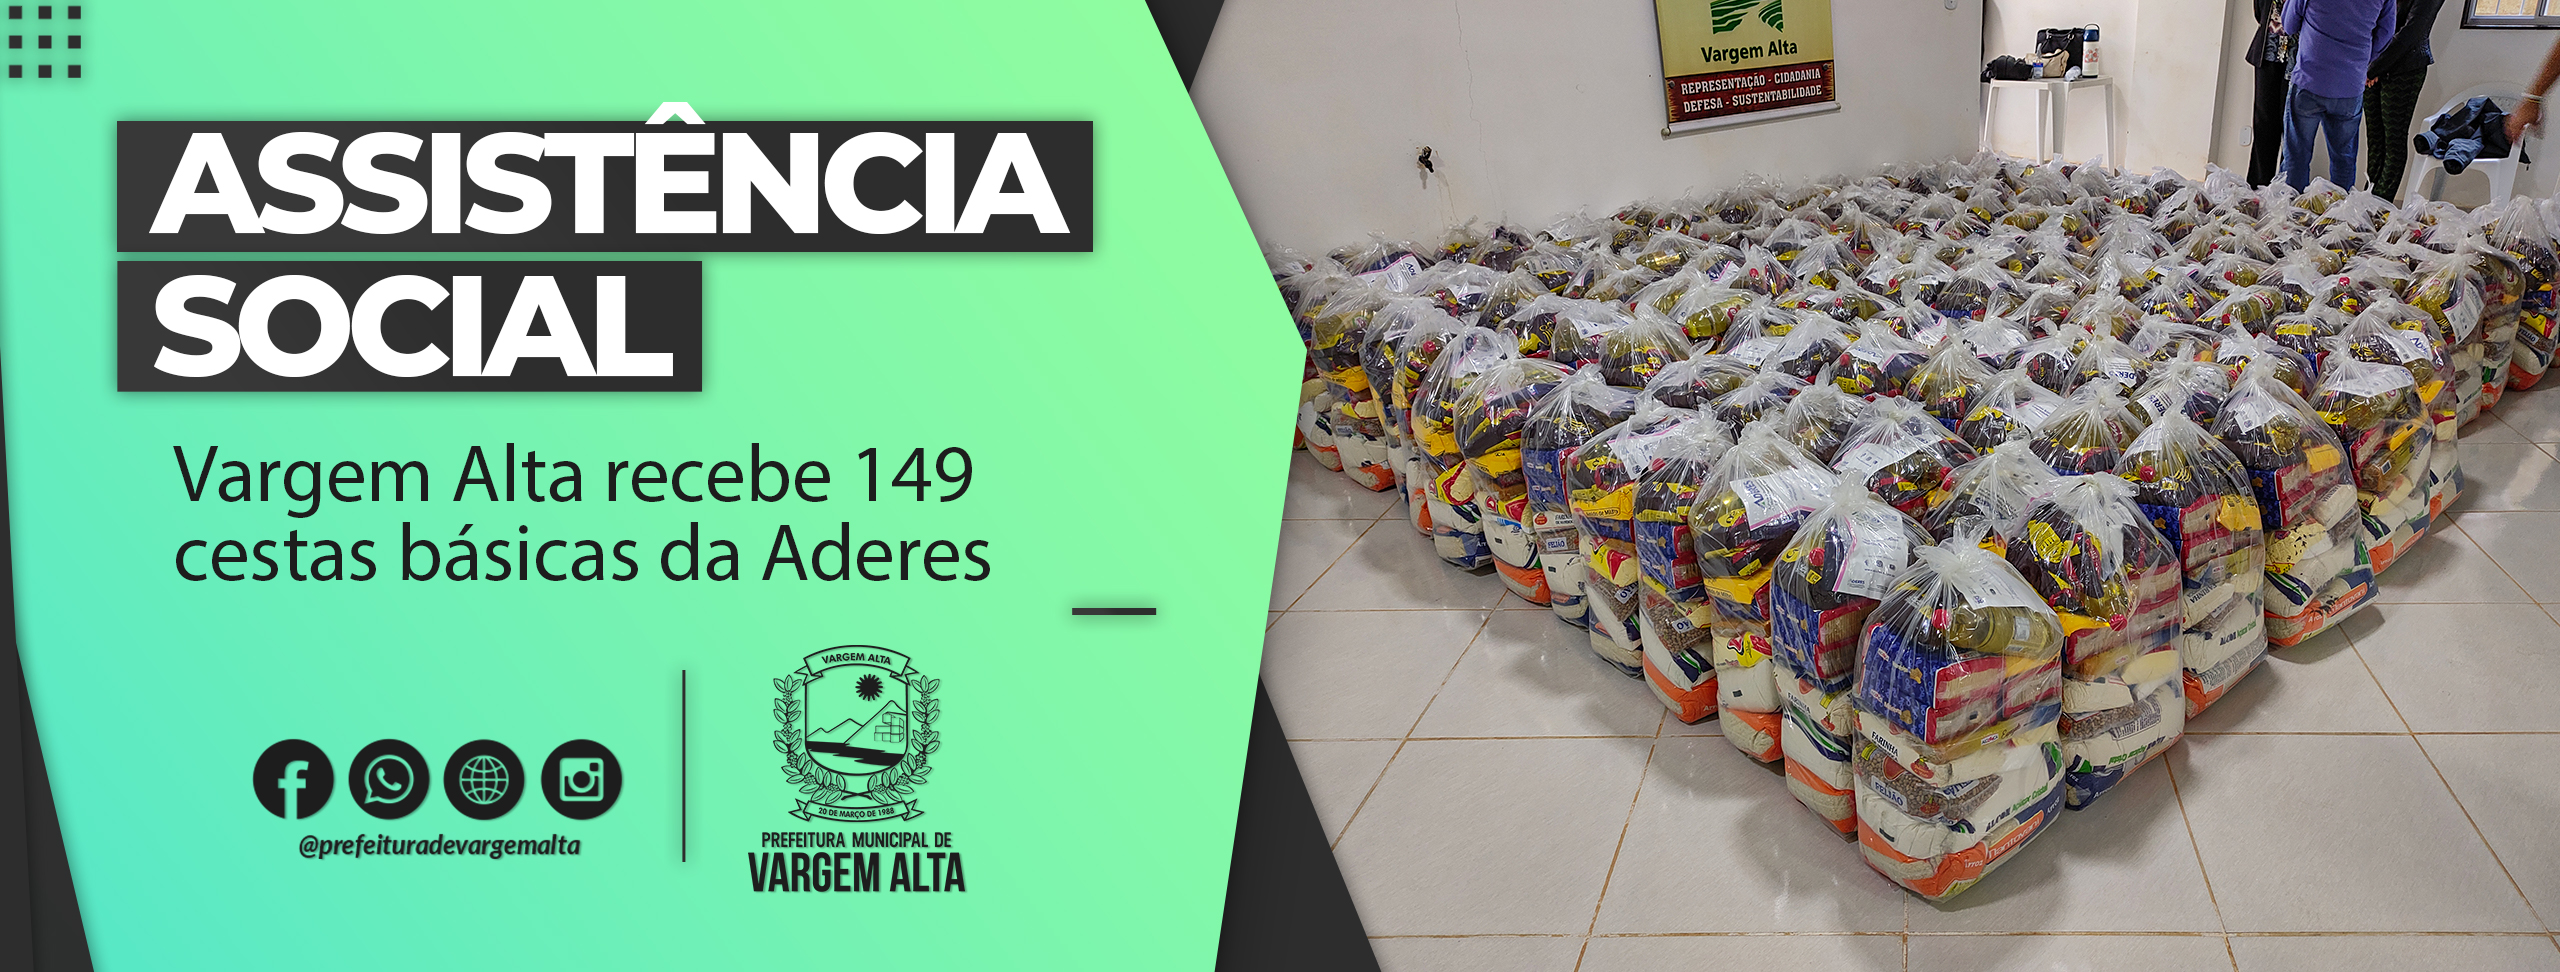 Vargem Alta recebe 149 cestas básicas da Aderes